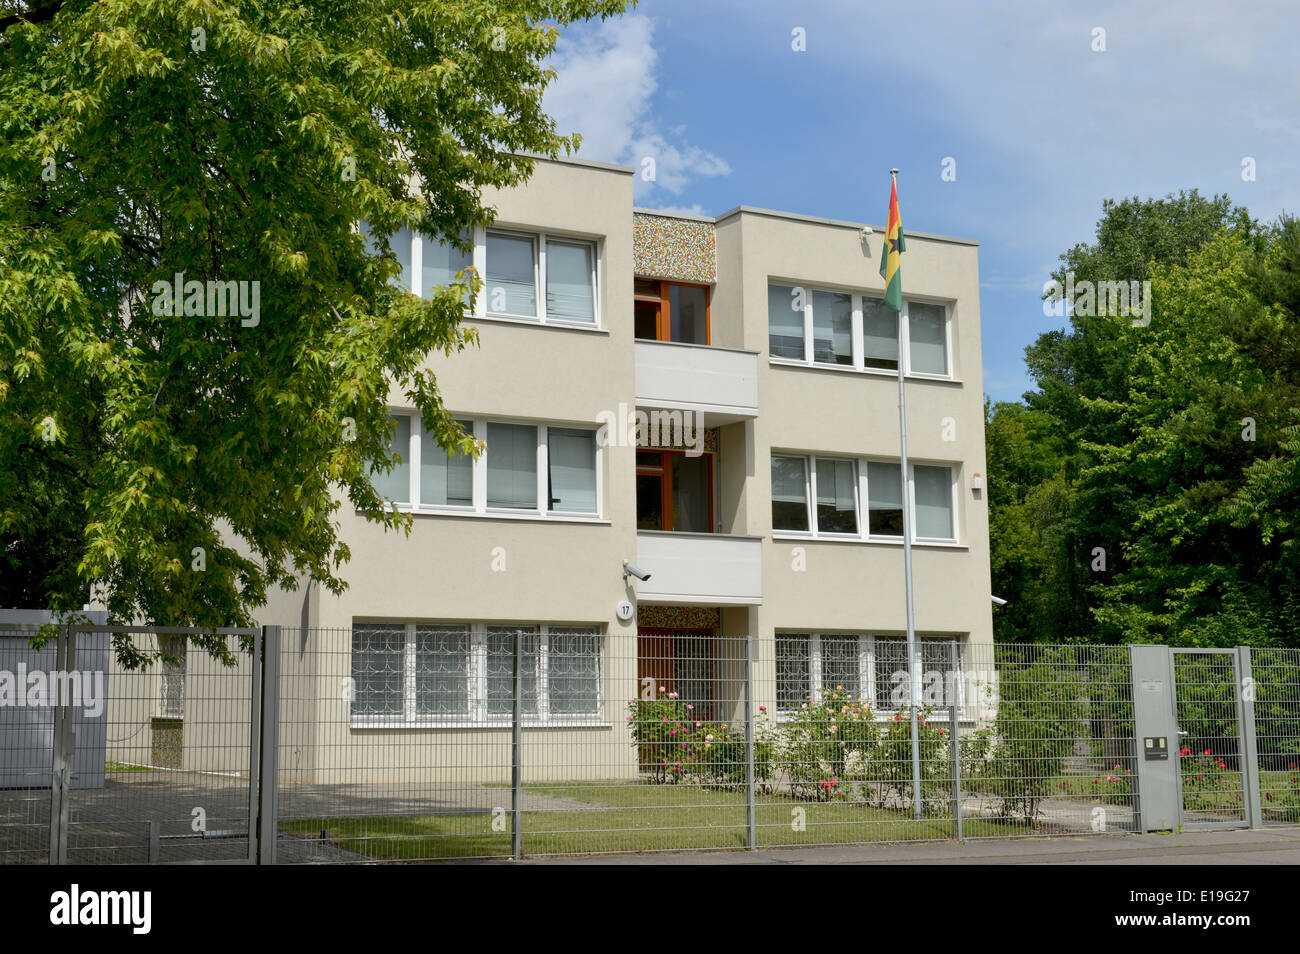 Botschaft Ghana, Stavangerstrasse, Pankow, Berlin, Deutschland Banque D'Images